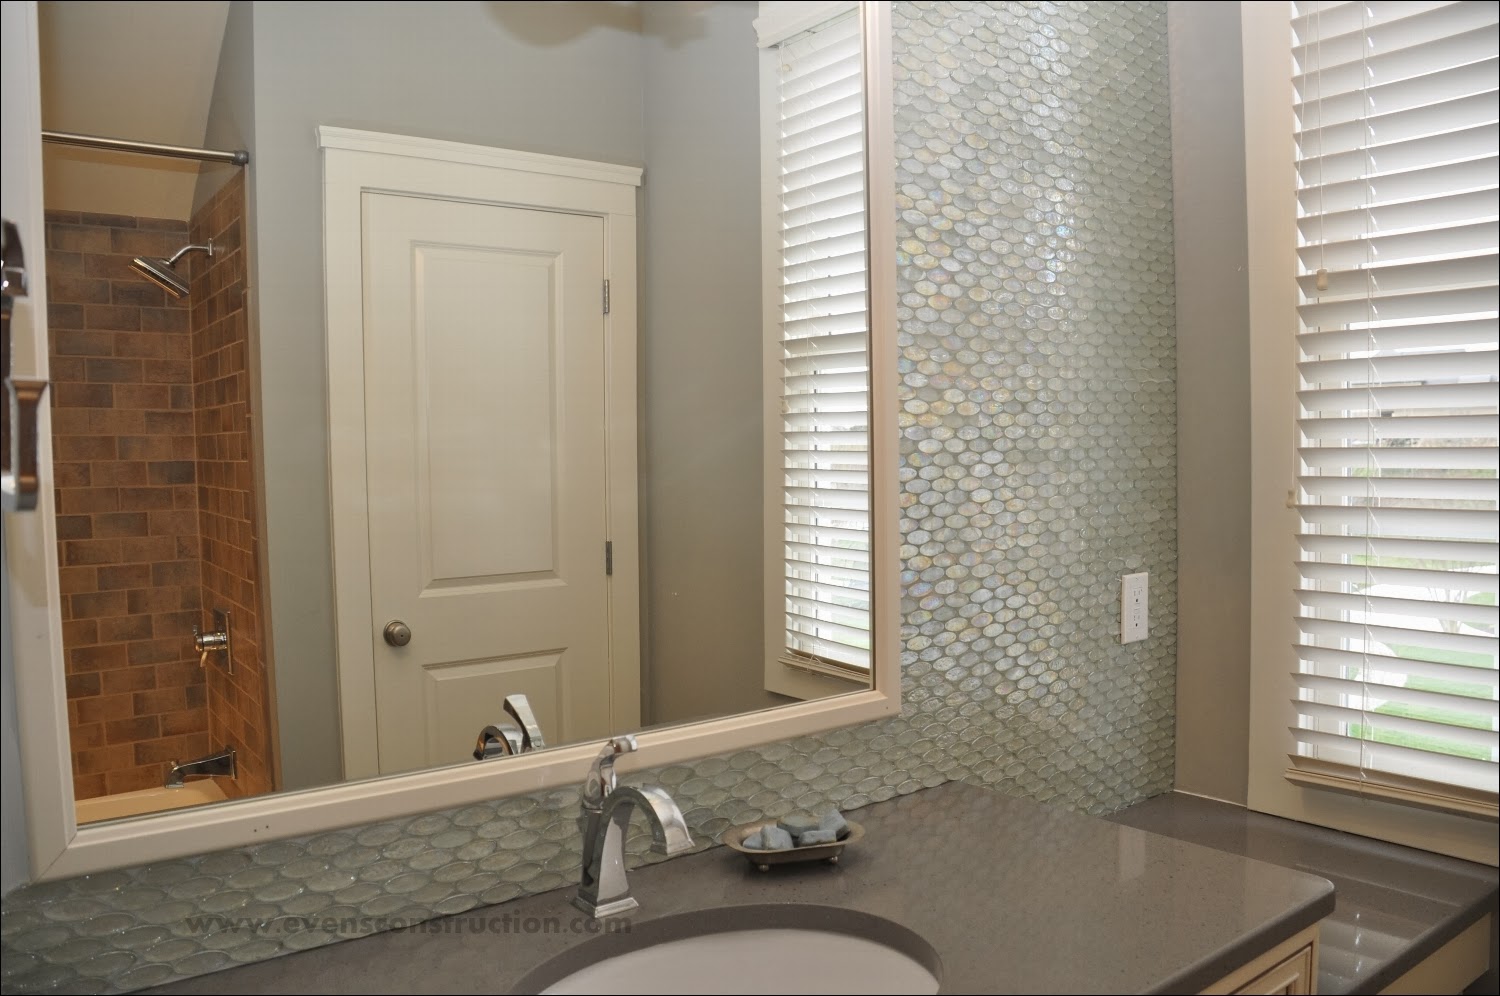 bathroom-fancy-small-bathroom-design-ideas-in-cool-amazing-glass-bathroom-wall-tiles-amazingly-cool-tile-ideas-to-spruce-your-small-bathroom